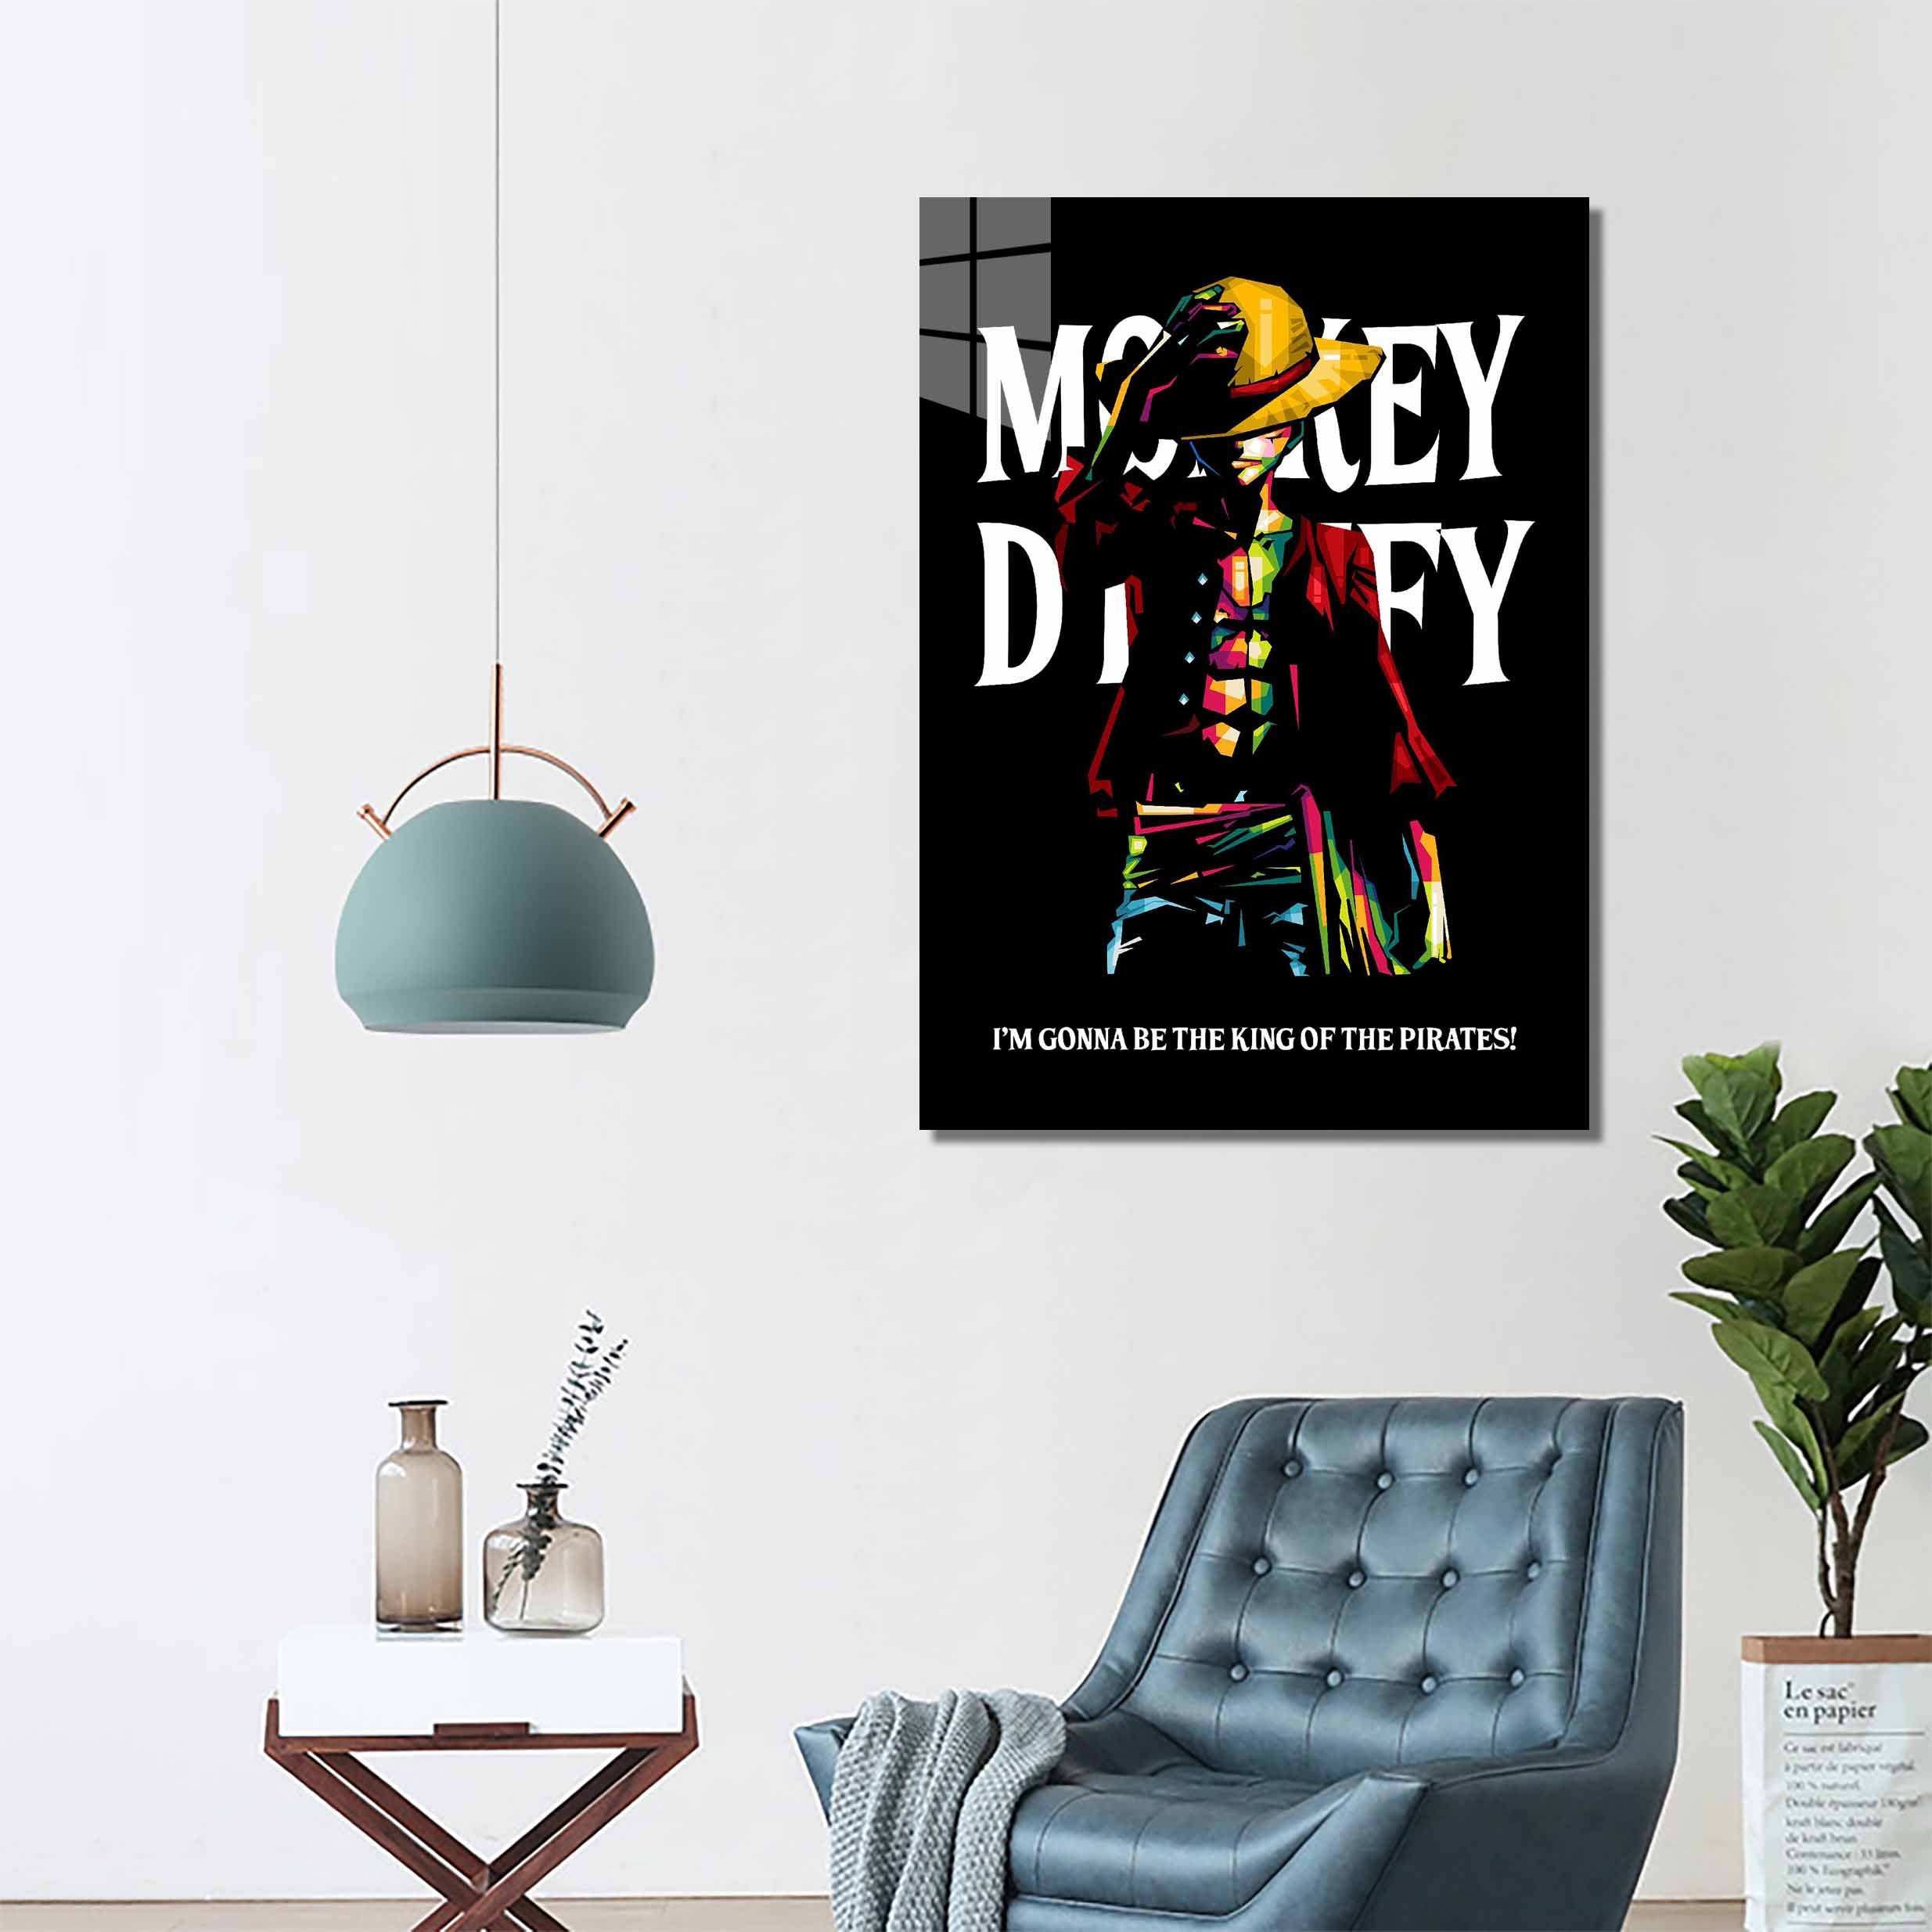 Monkey D luffy text art-designed by @Doublede Design